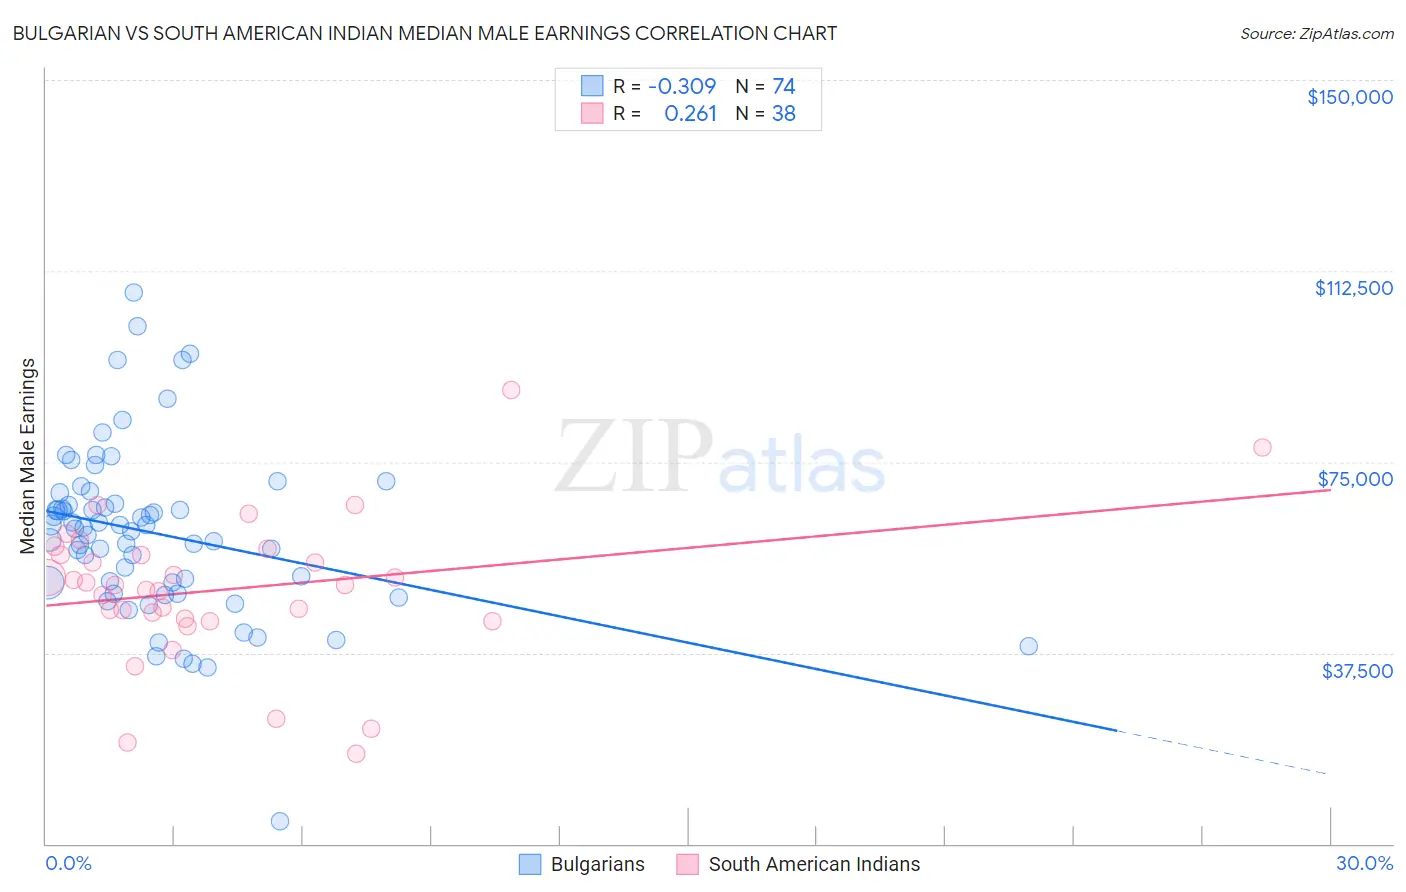 Bulgarian vs South American Indian Median Male Earnings